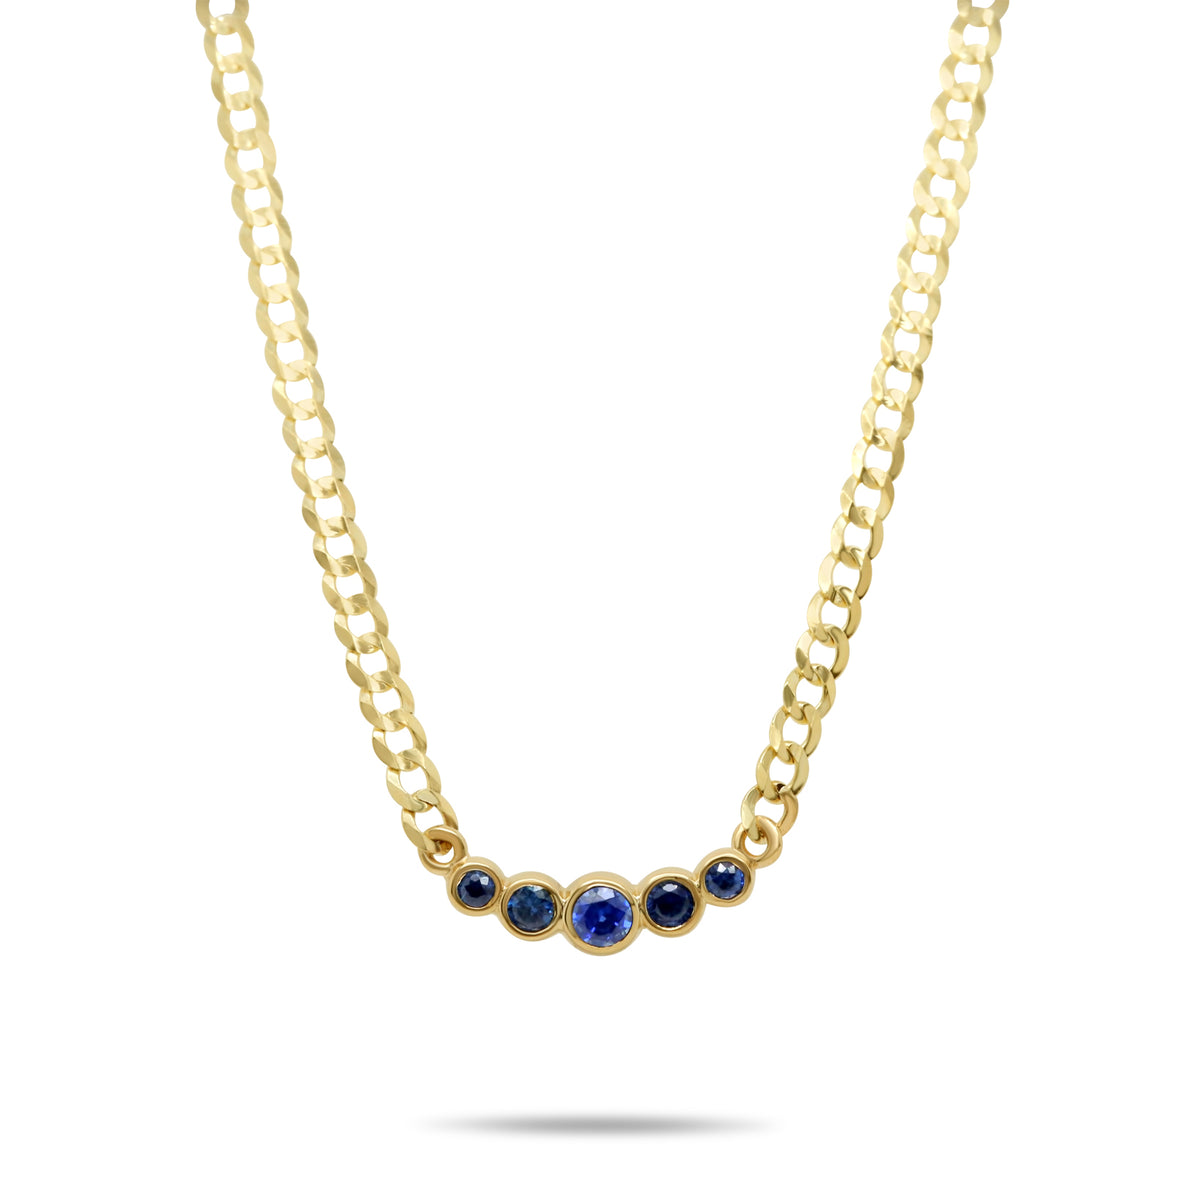 14k yellow gold curb chain five stone bezel set round brilliant cut blue sapphire gemstone necklace